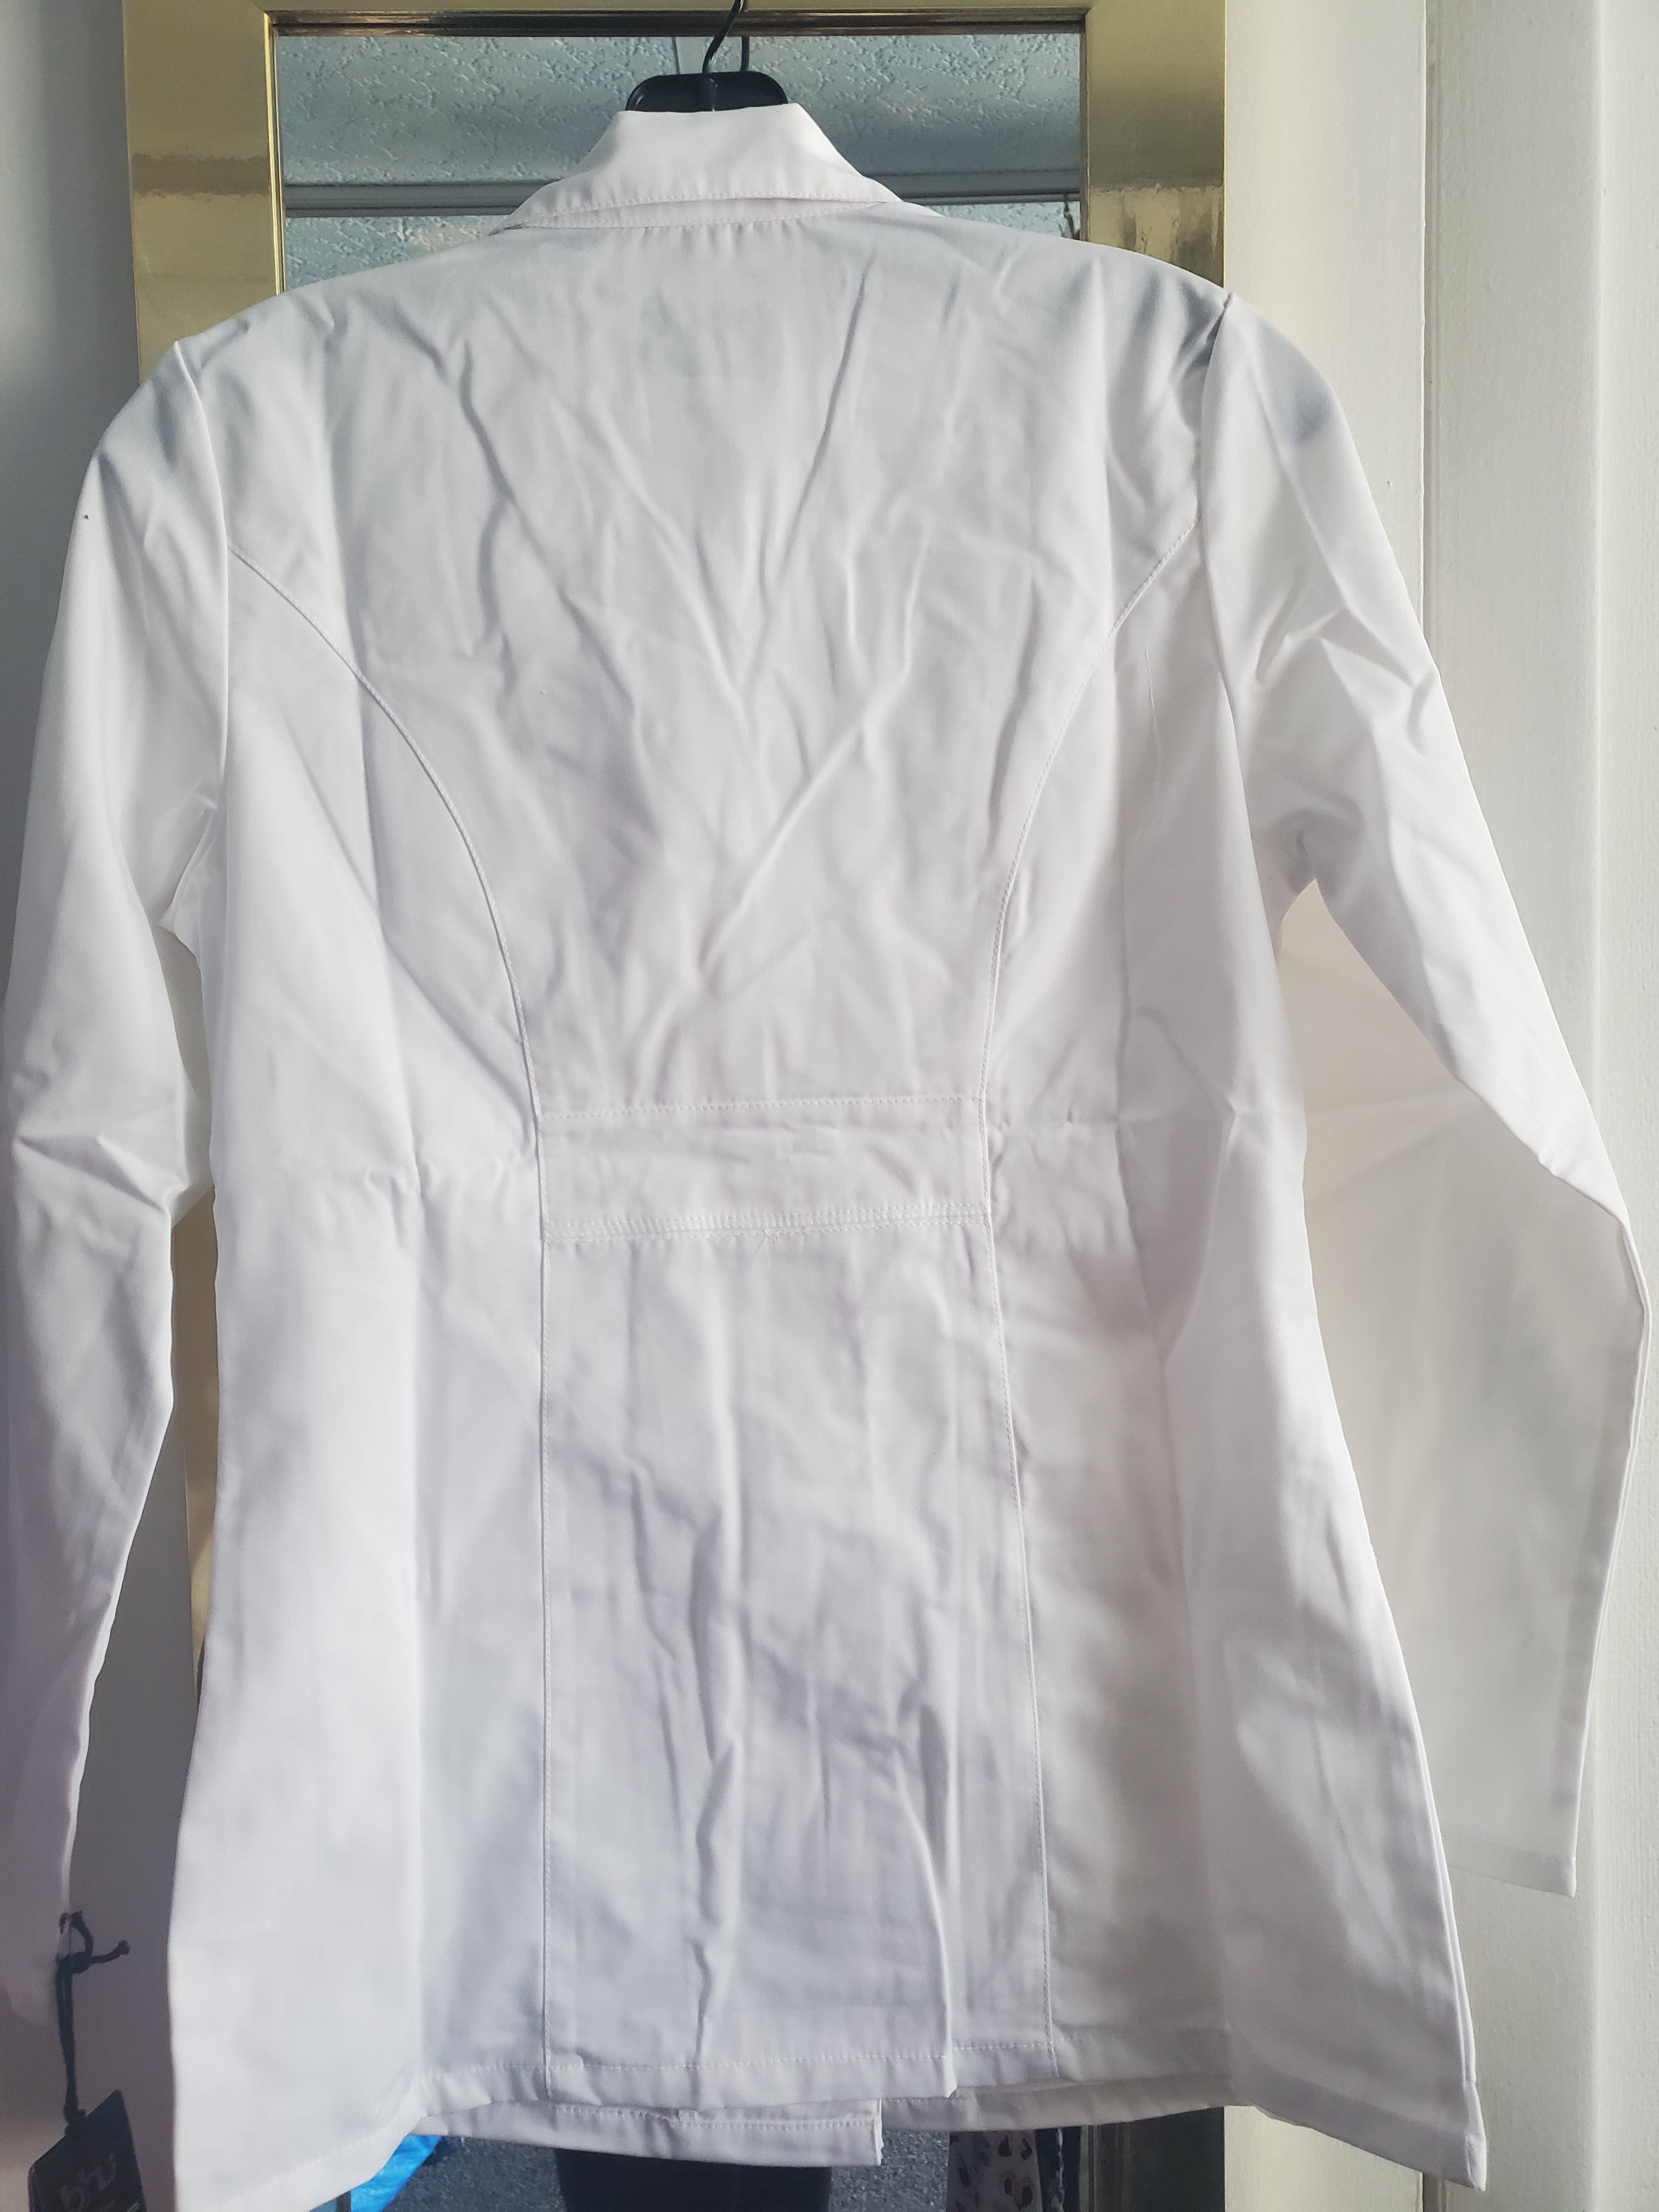 BH White Tab Waist Lab Coat